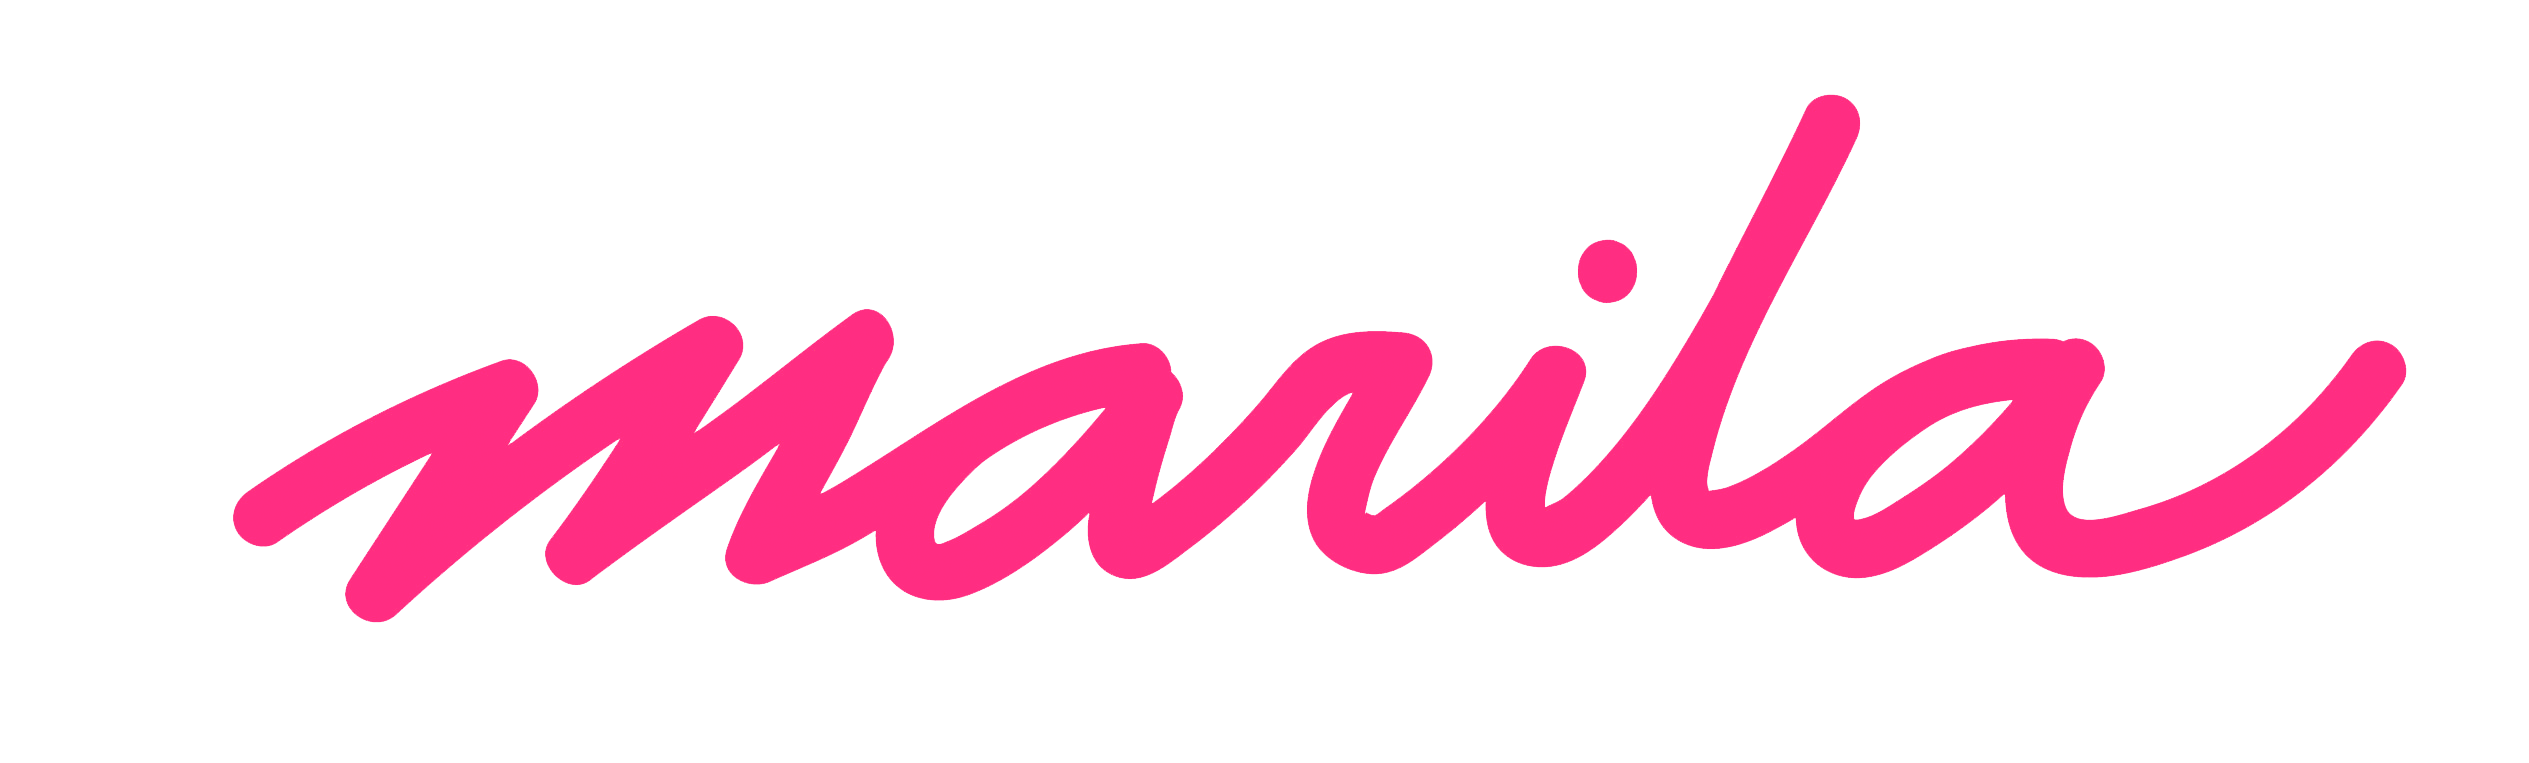 manila_logo